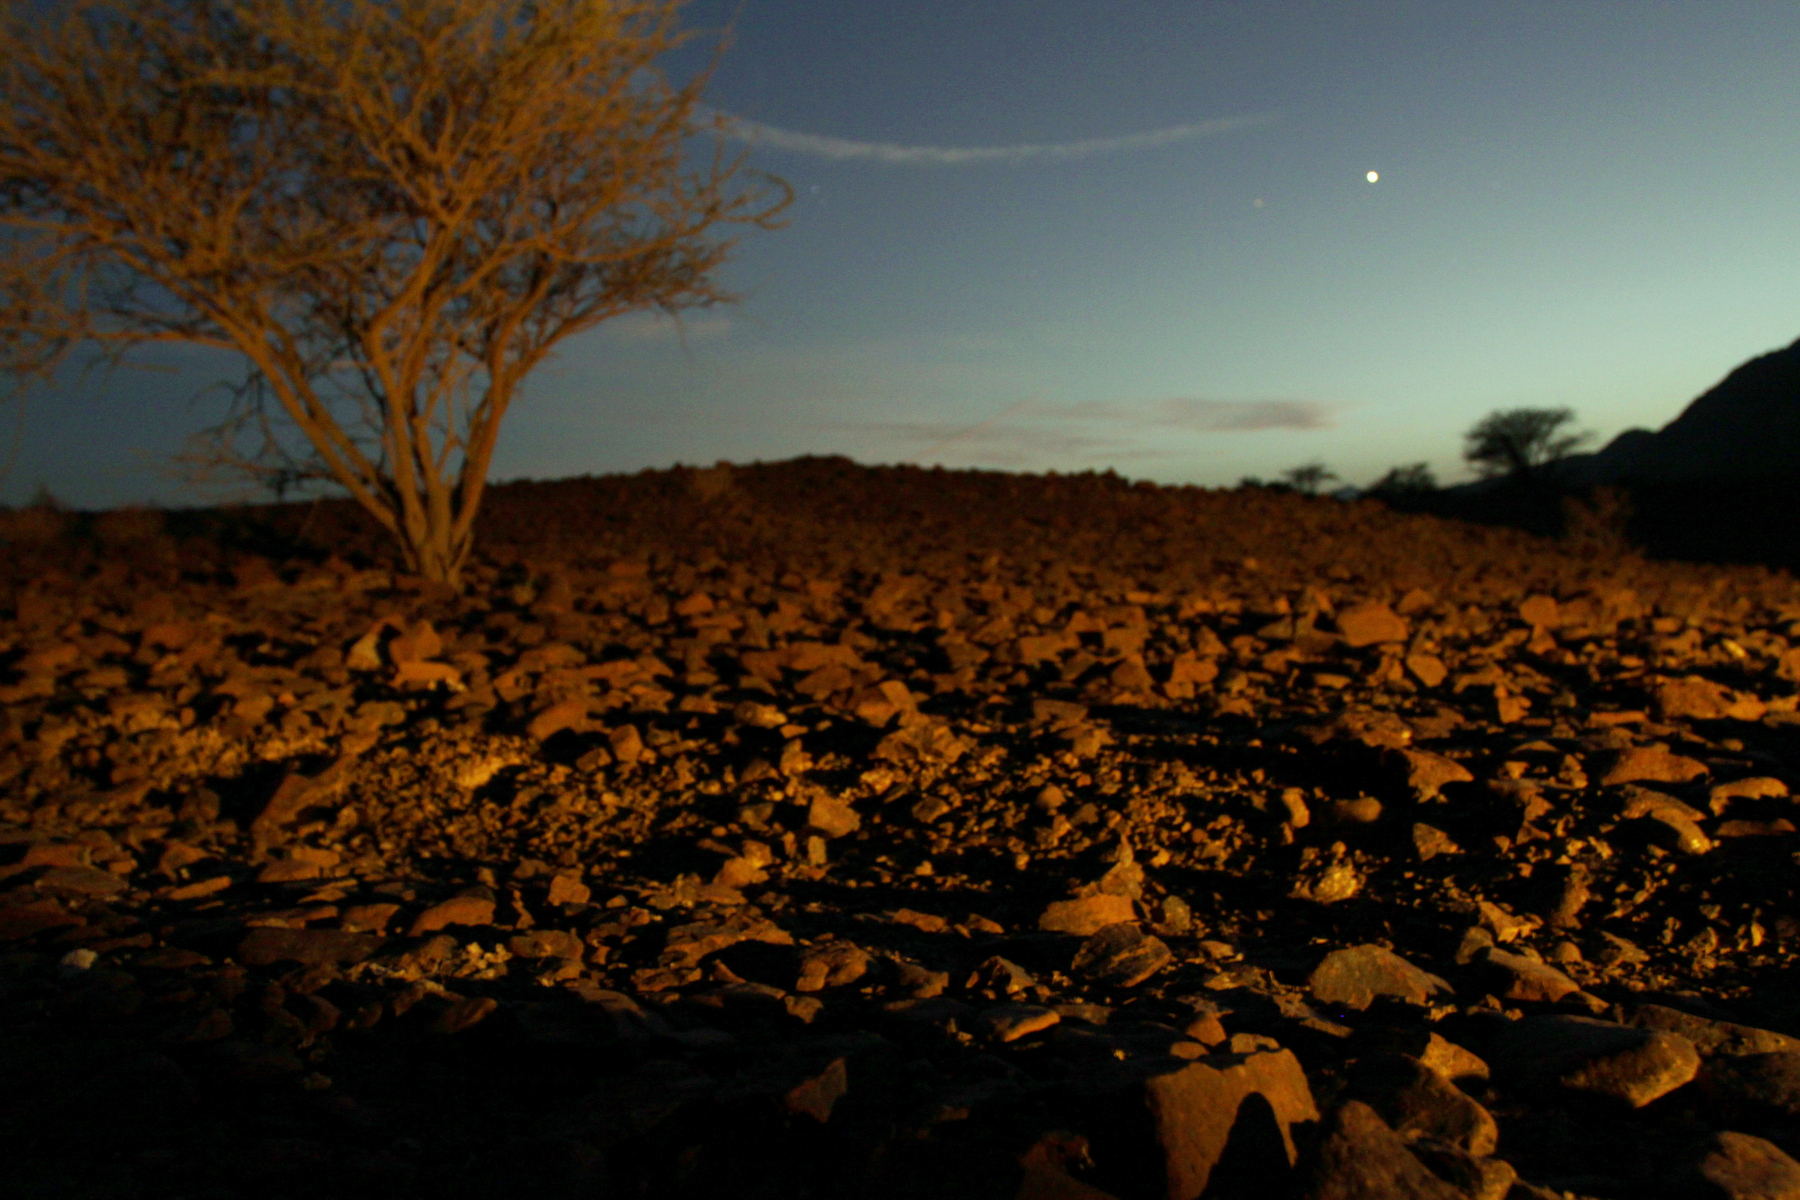 a digital photograph of a night sky in a desert